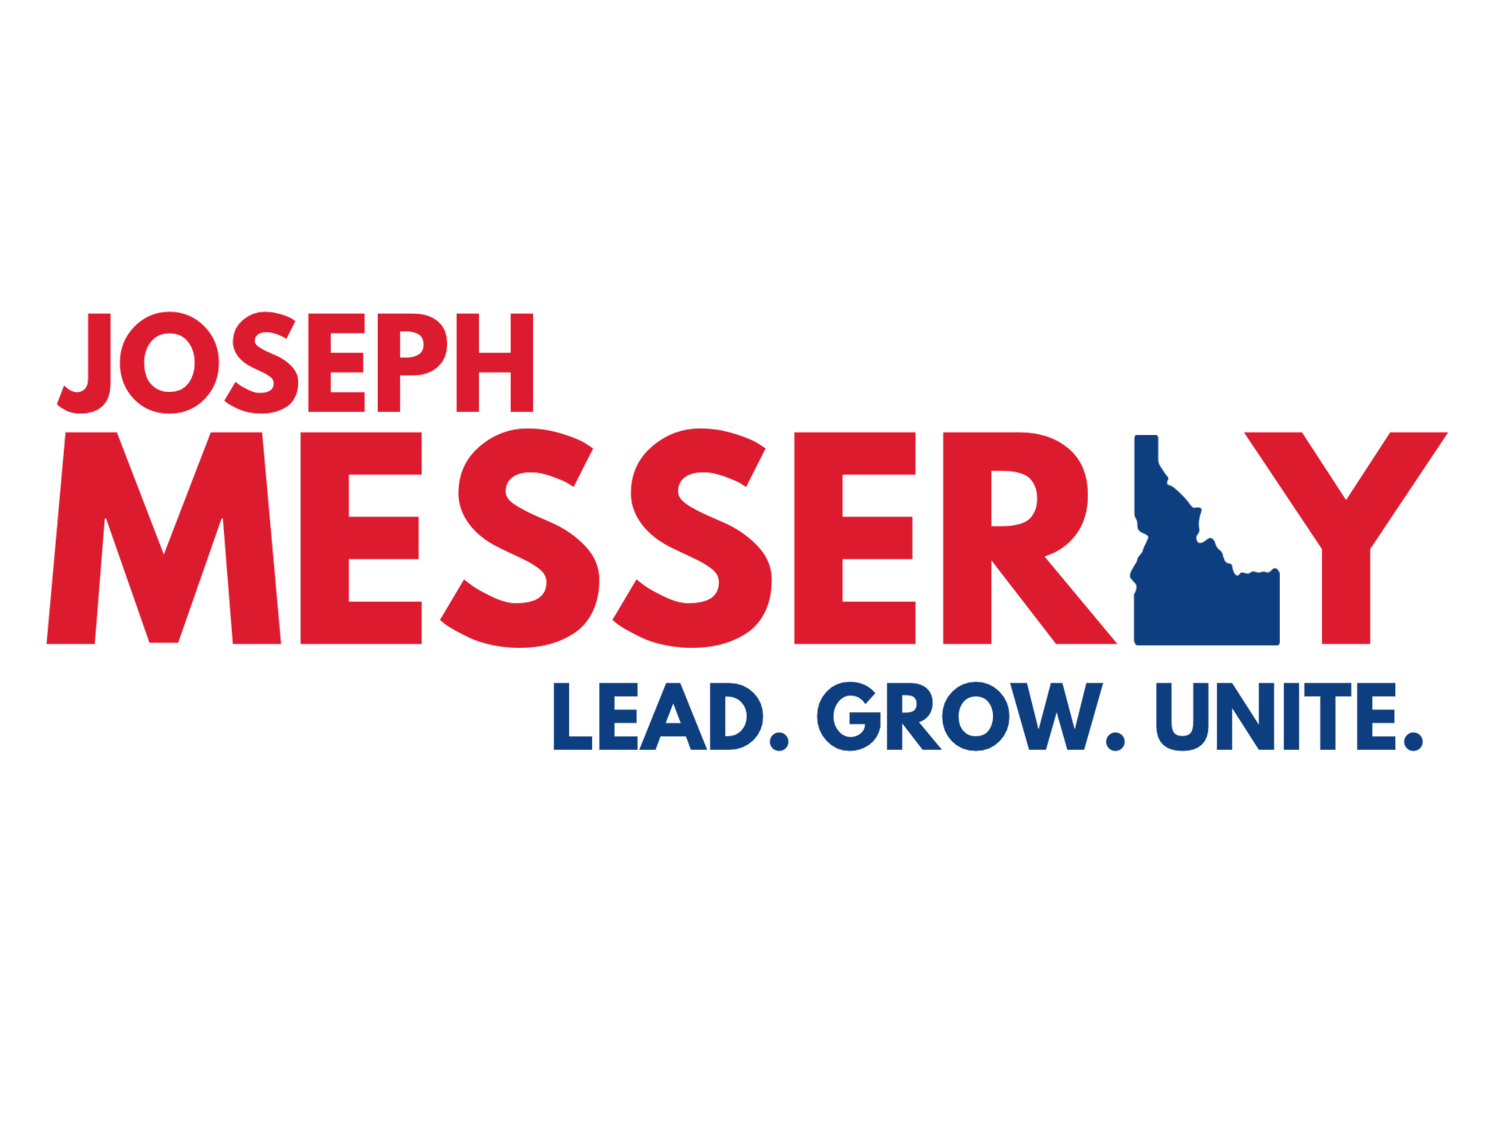 Joseph Messerly for Idaho